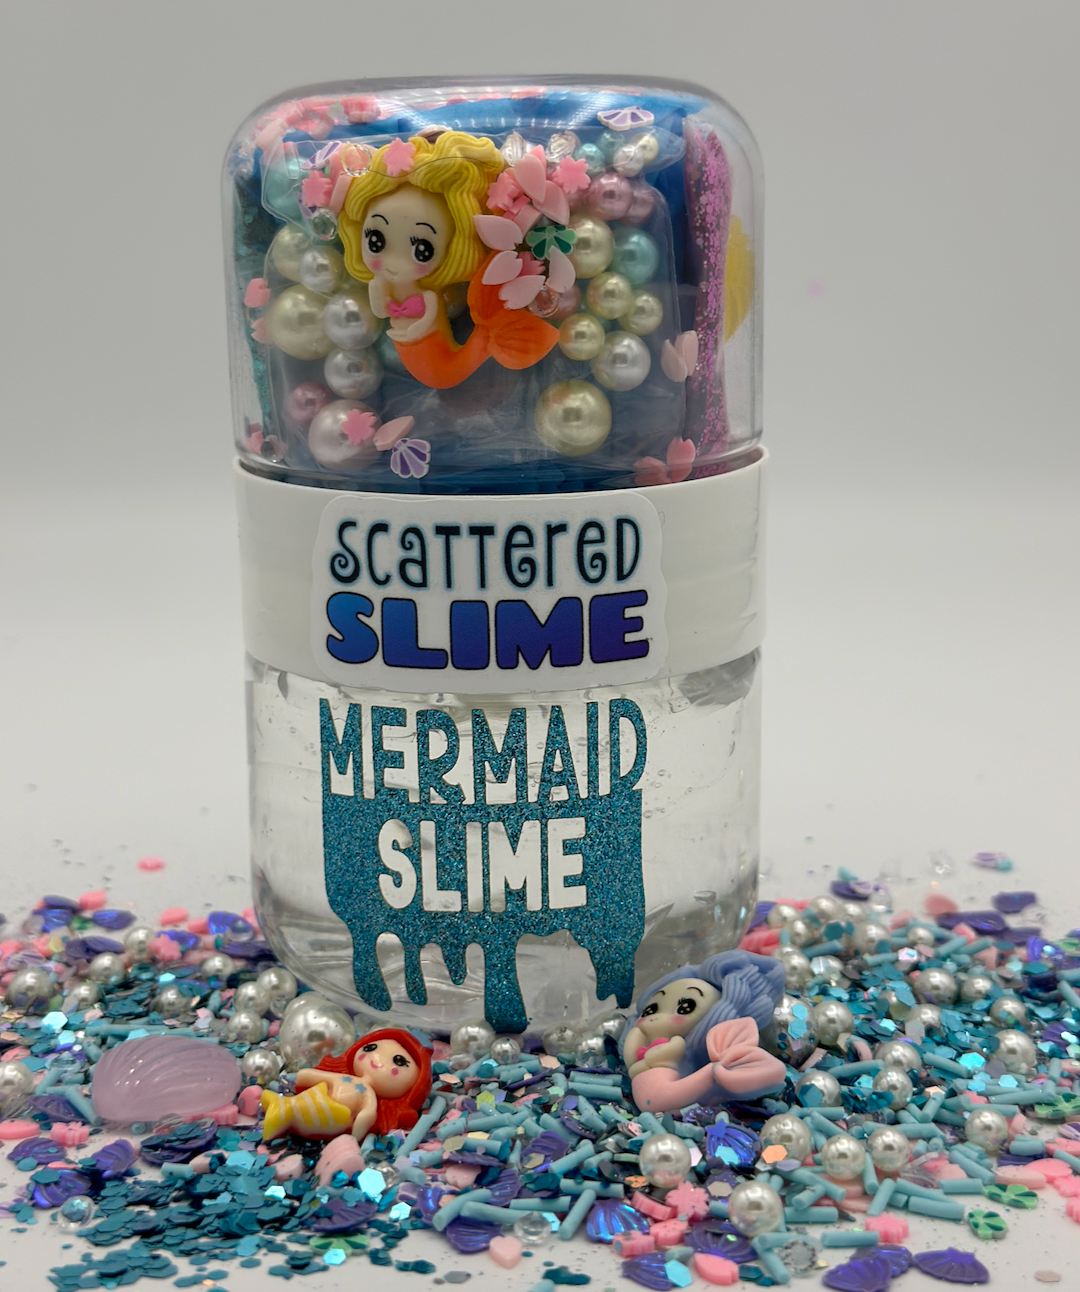 Scattered Slime: MERMAID SLIME KIT